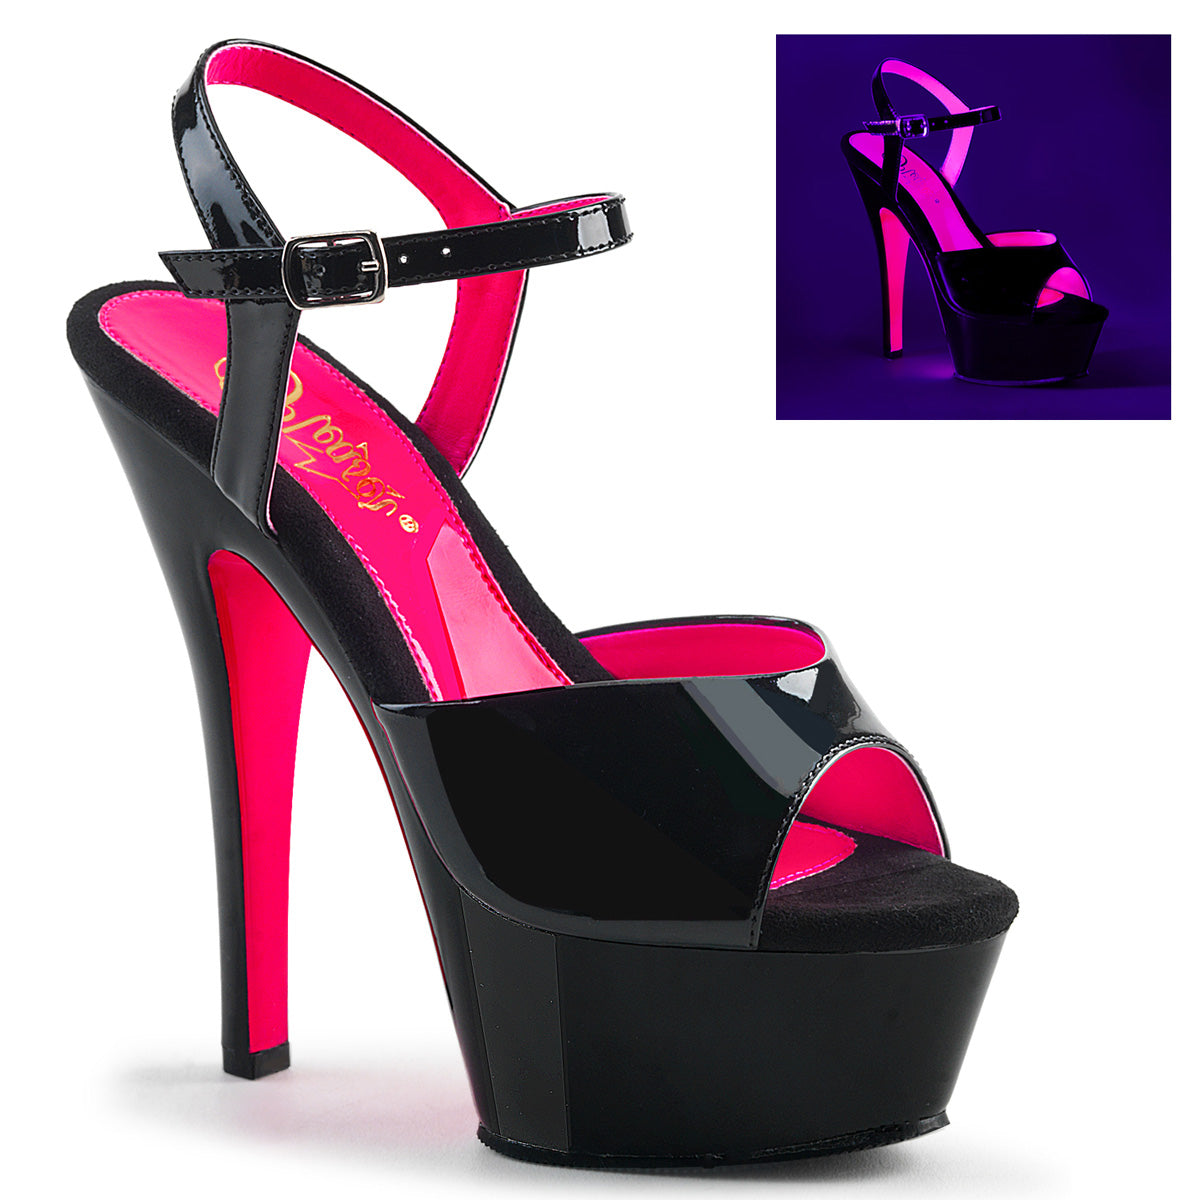 KISS-209TT 6" Heel Black Patent Hot Pink Pole Dancer Shoes